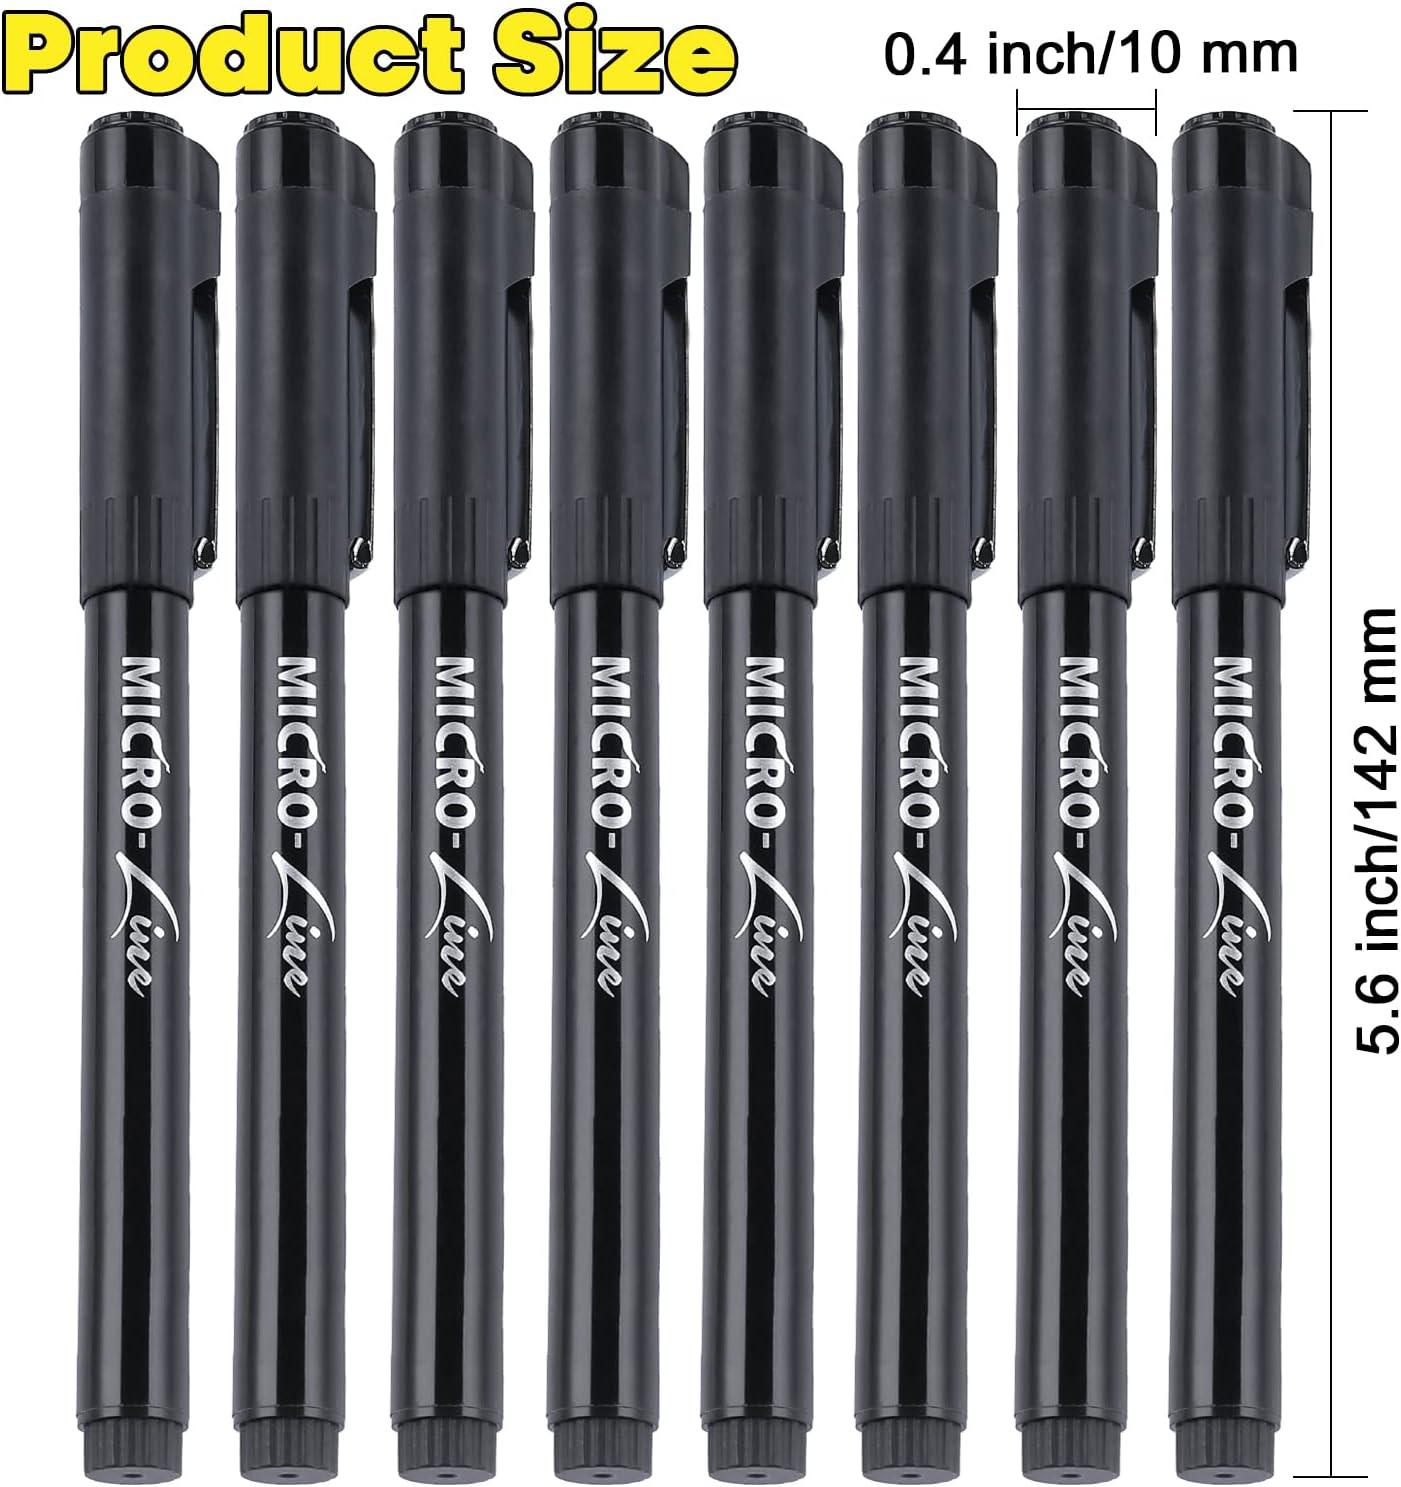 4 Sizes Black Calligraphy Pens Hand Lettering Pen Brush Markers